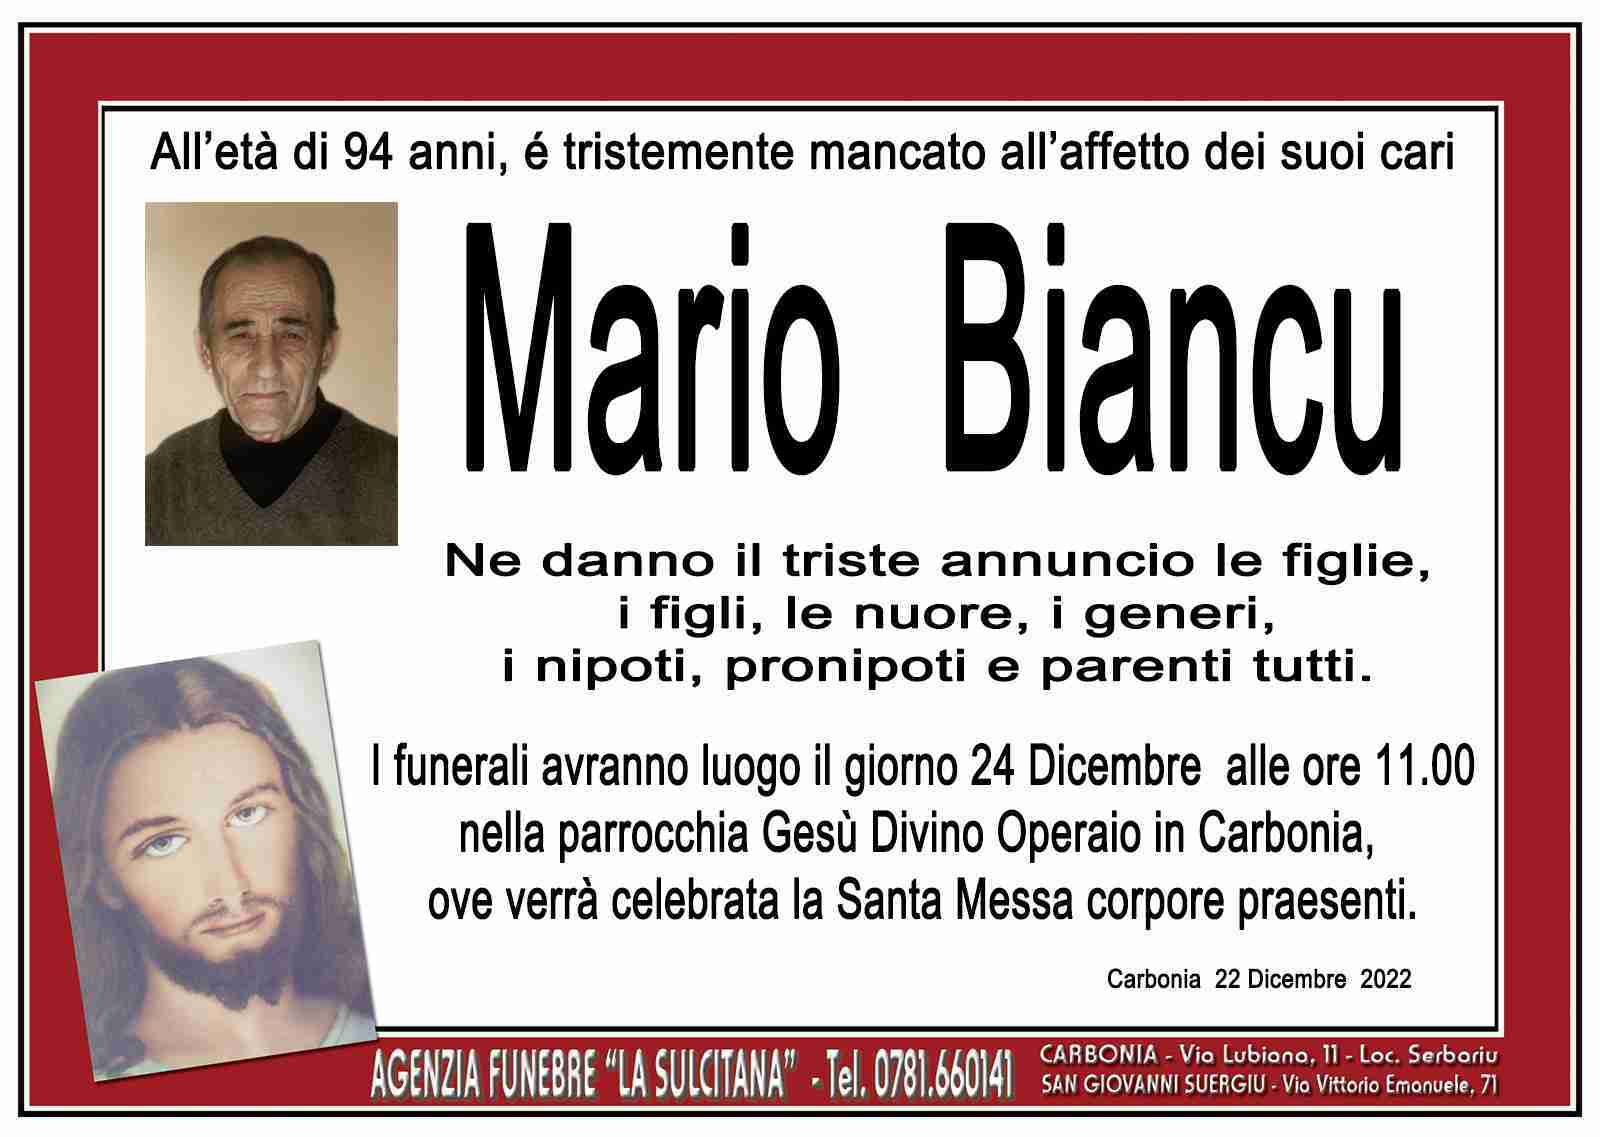 Mario Biancu